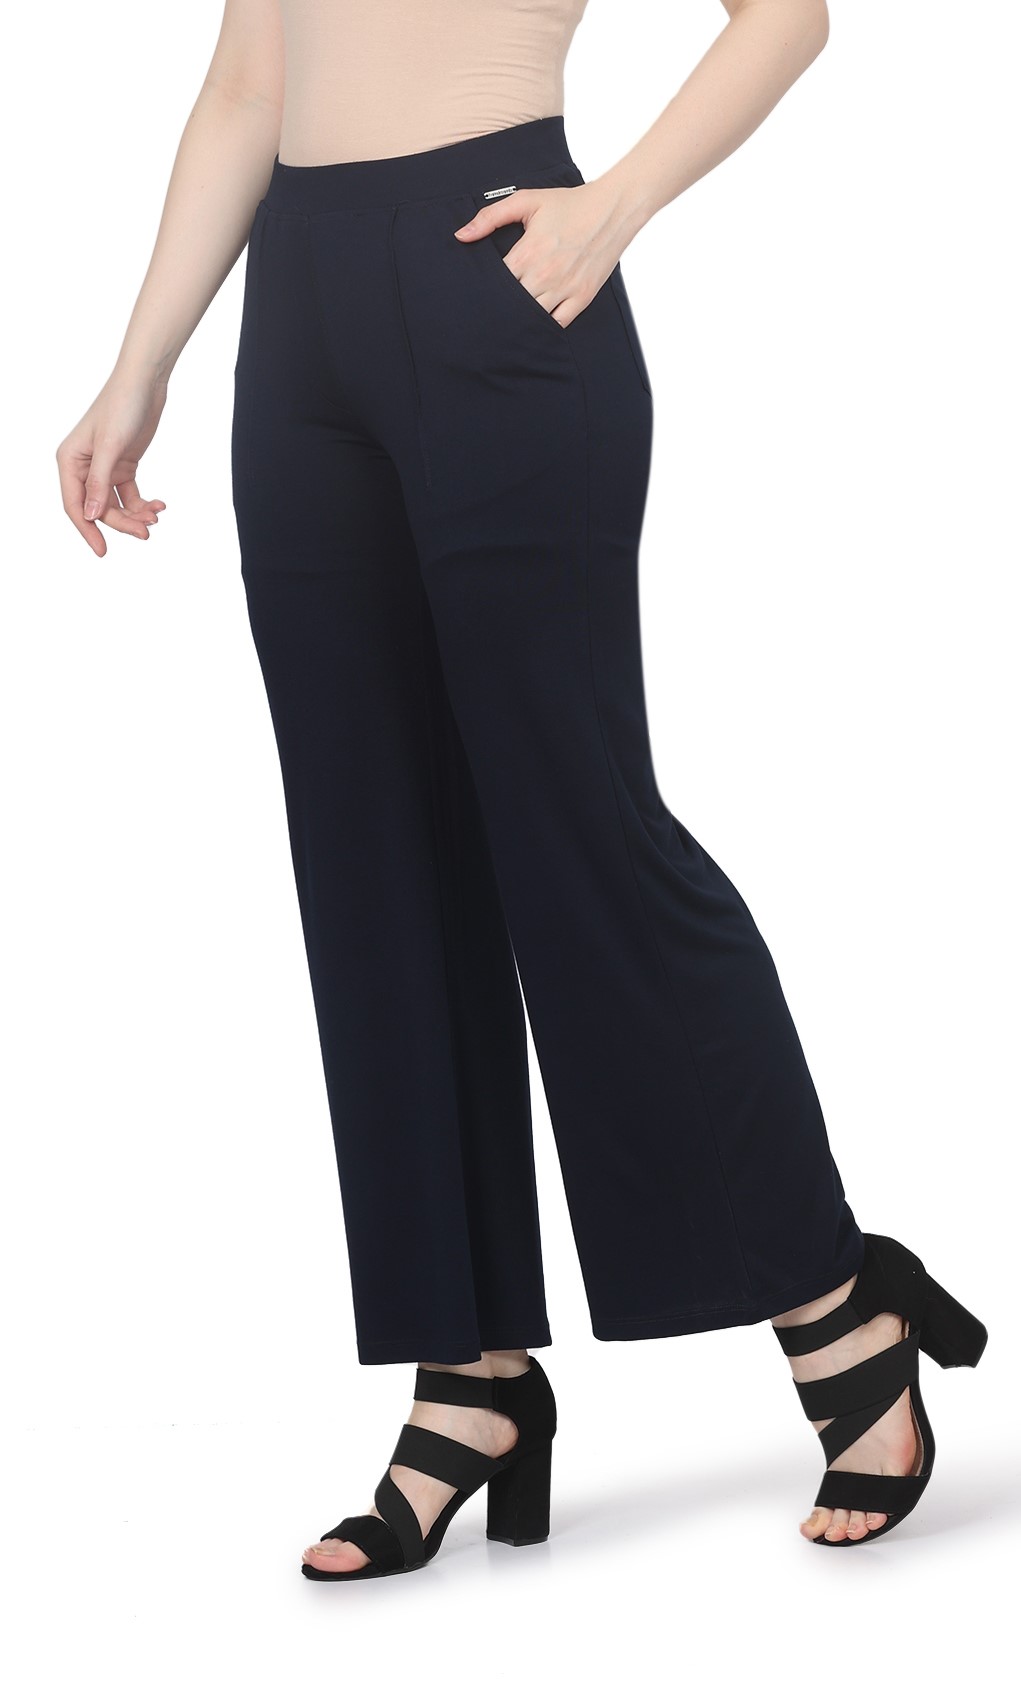 Balmain Flared & Bell-Bottom Pants for Women - Shop on FARFETCH